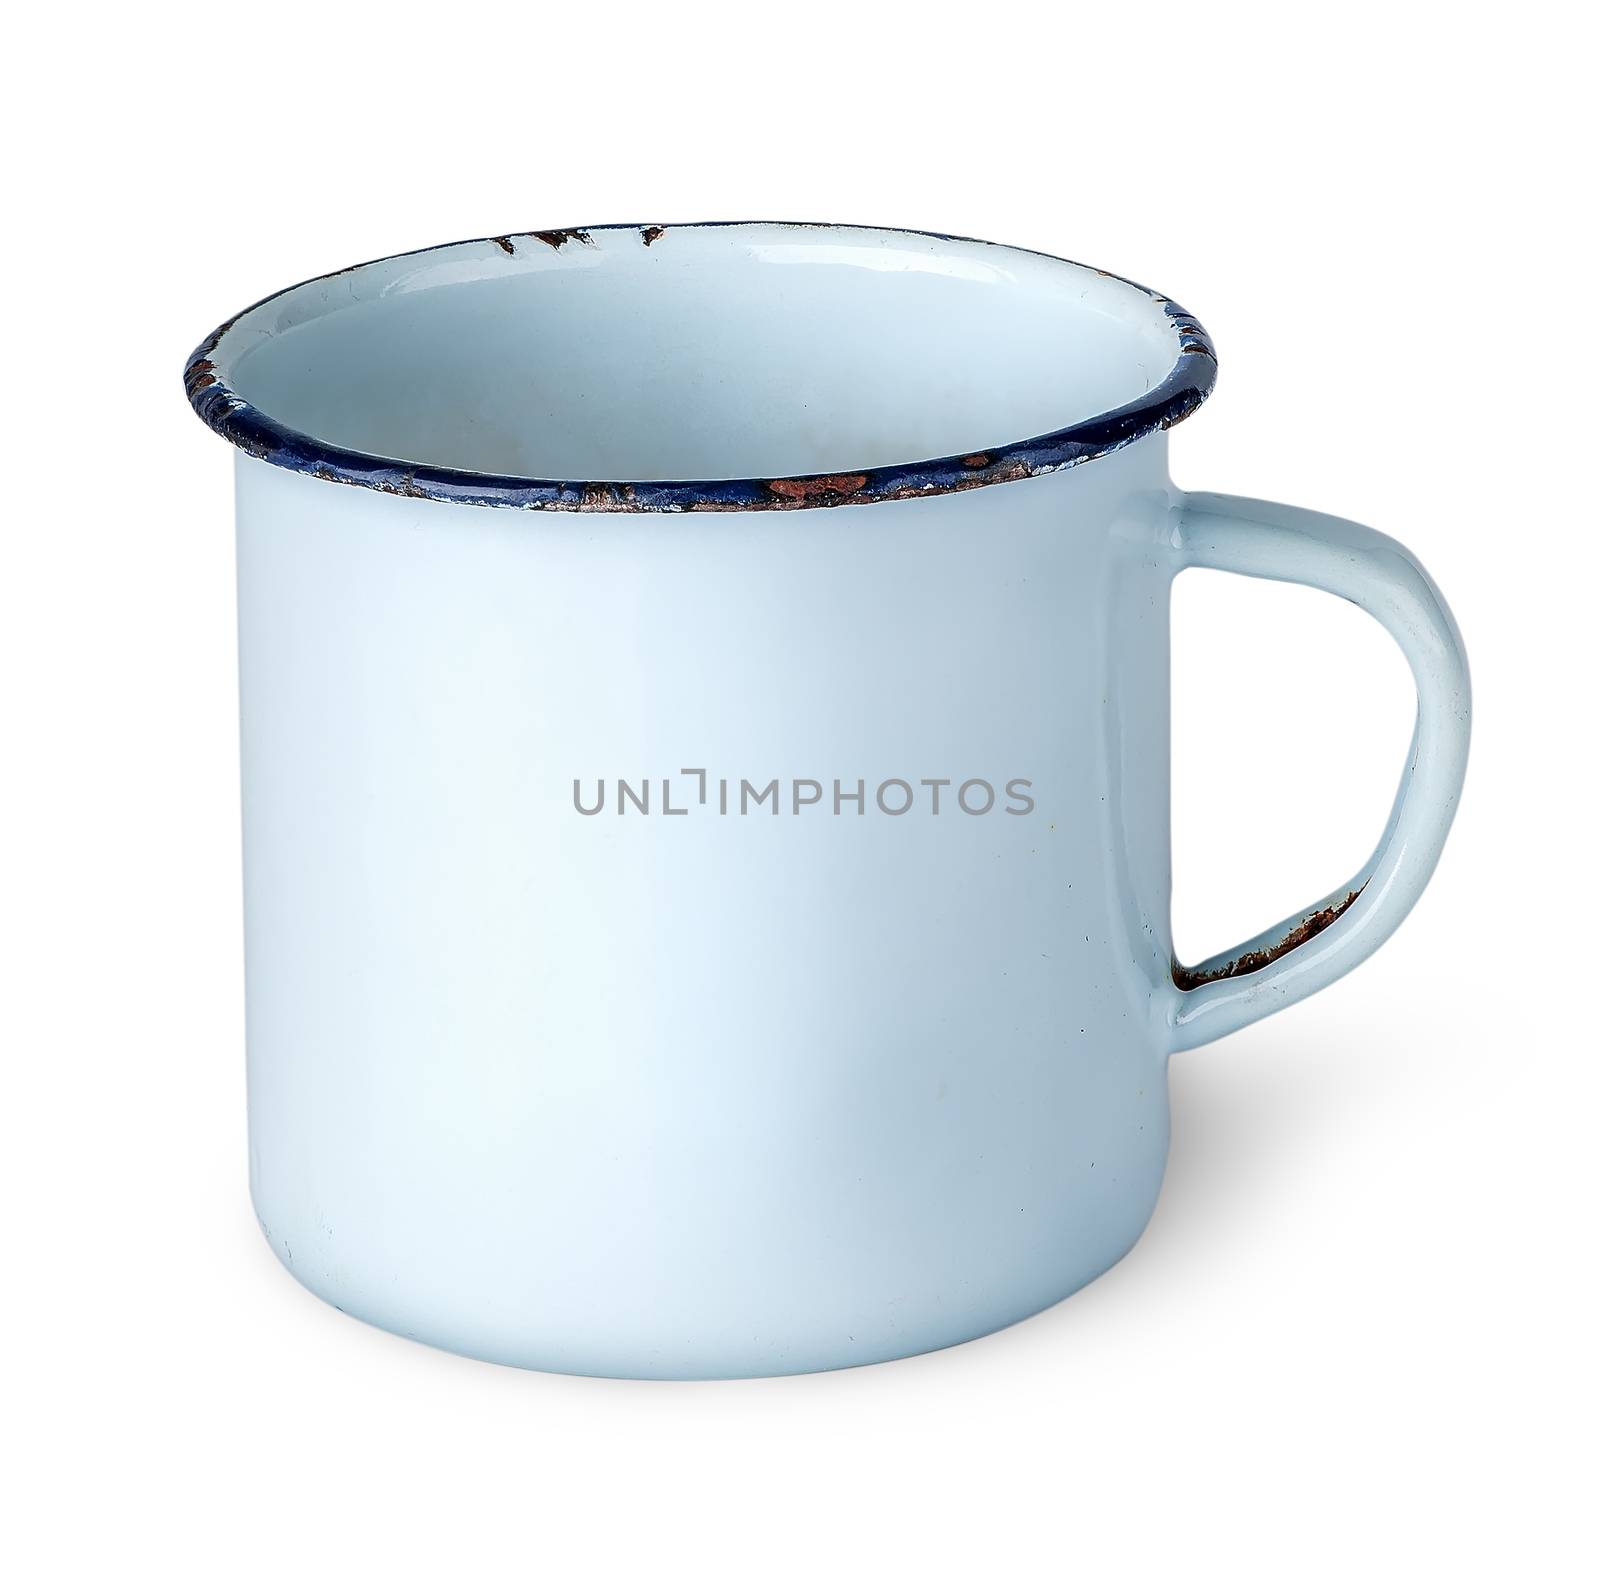 Old worn enameled mug rotated by Cipariss